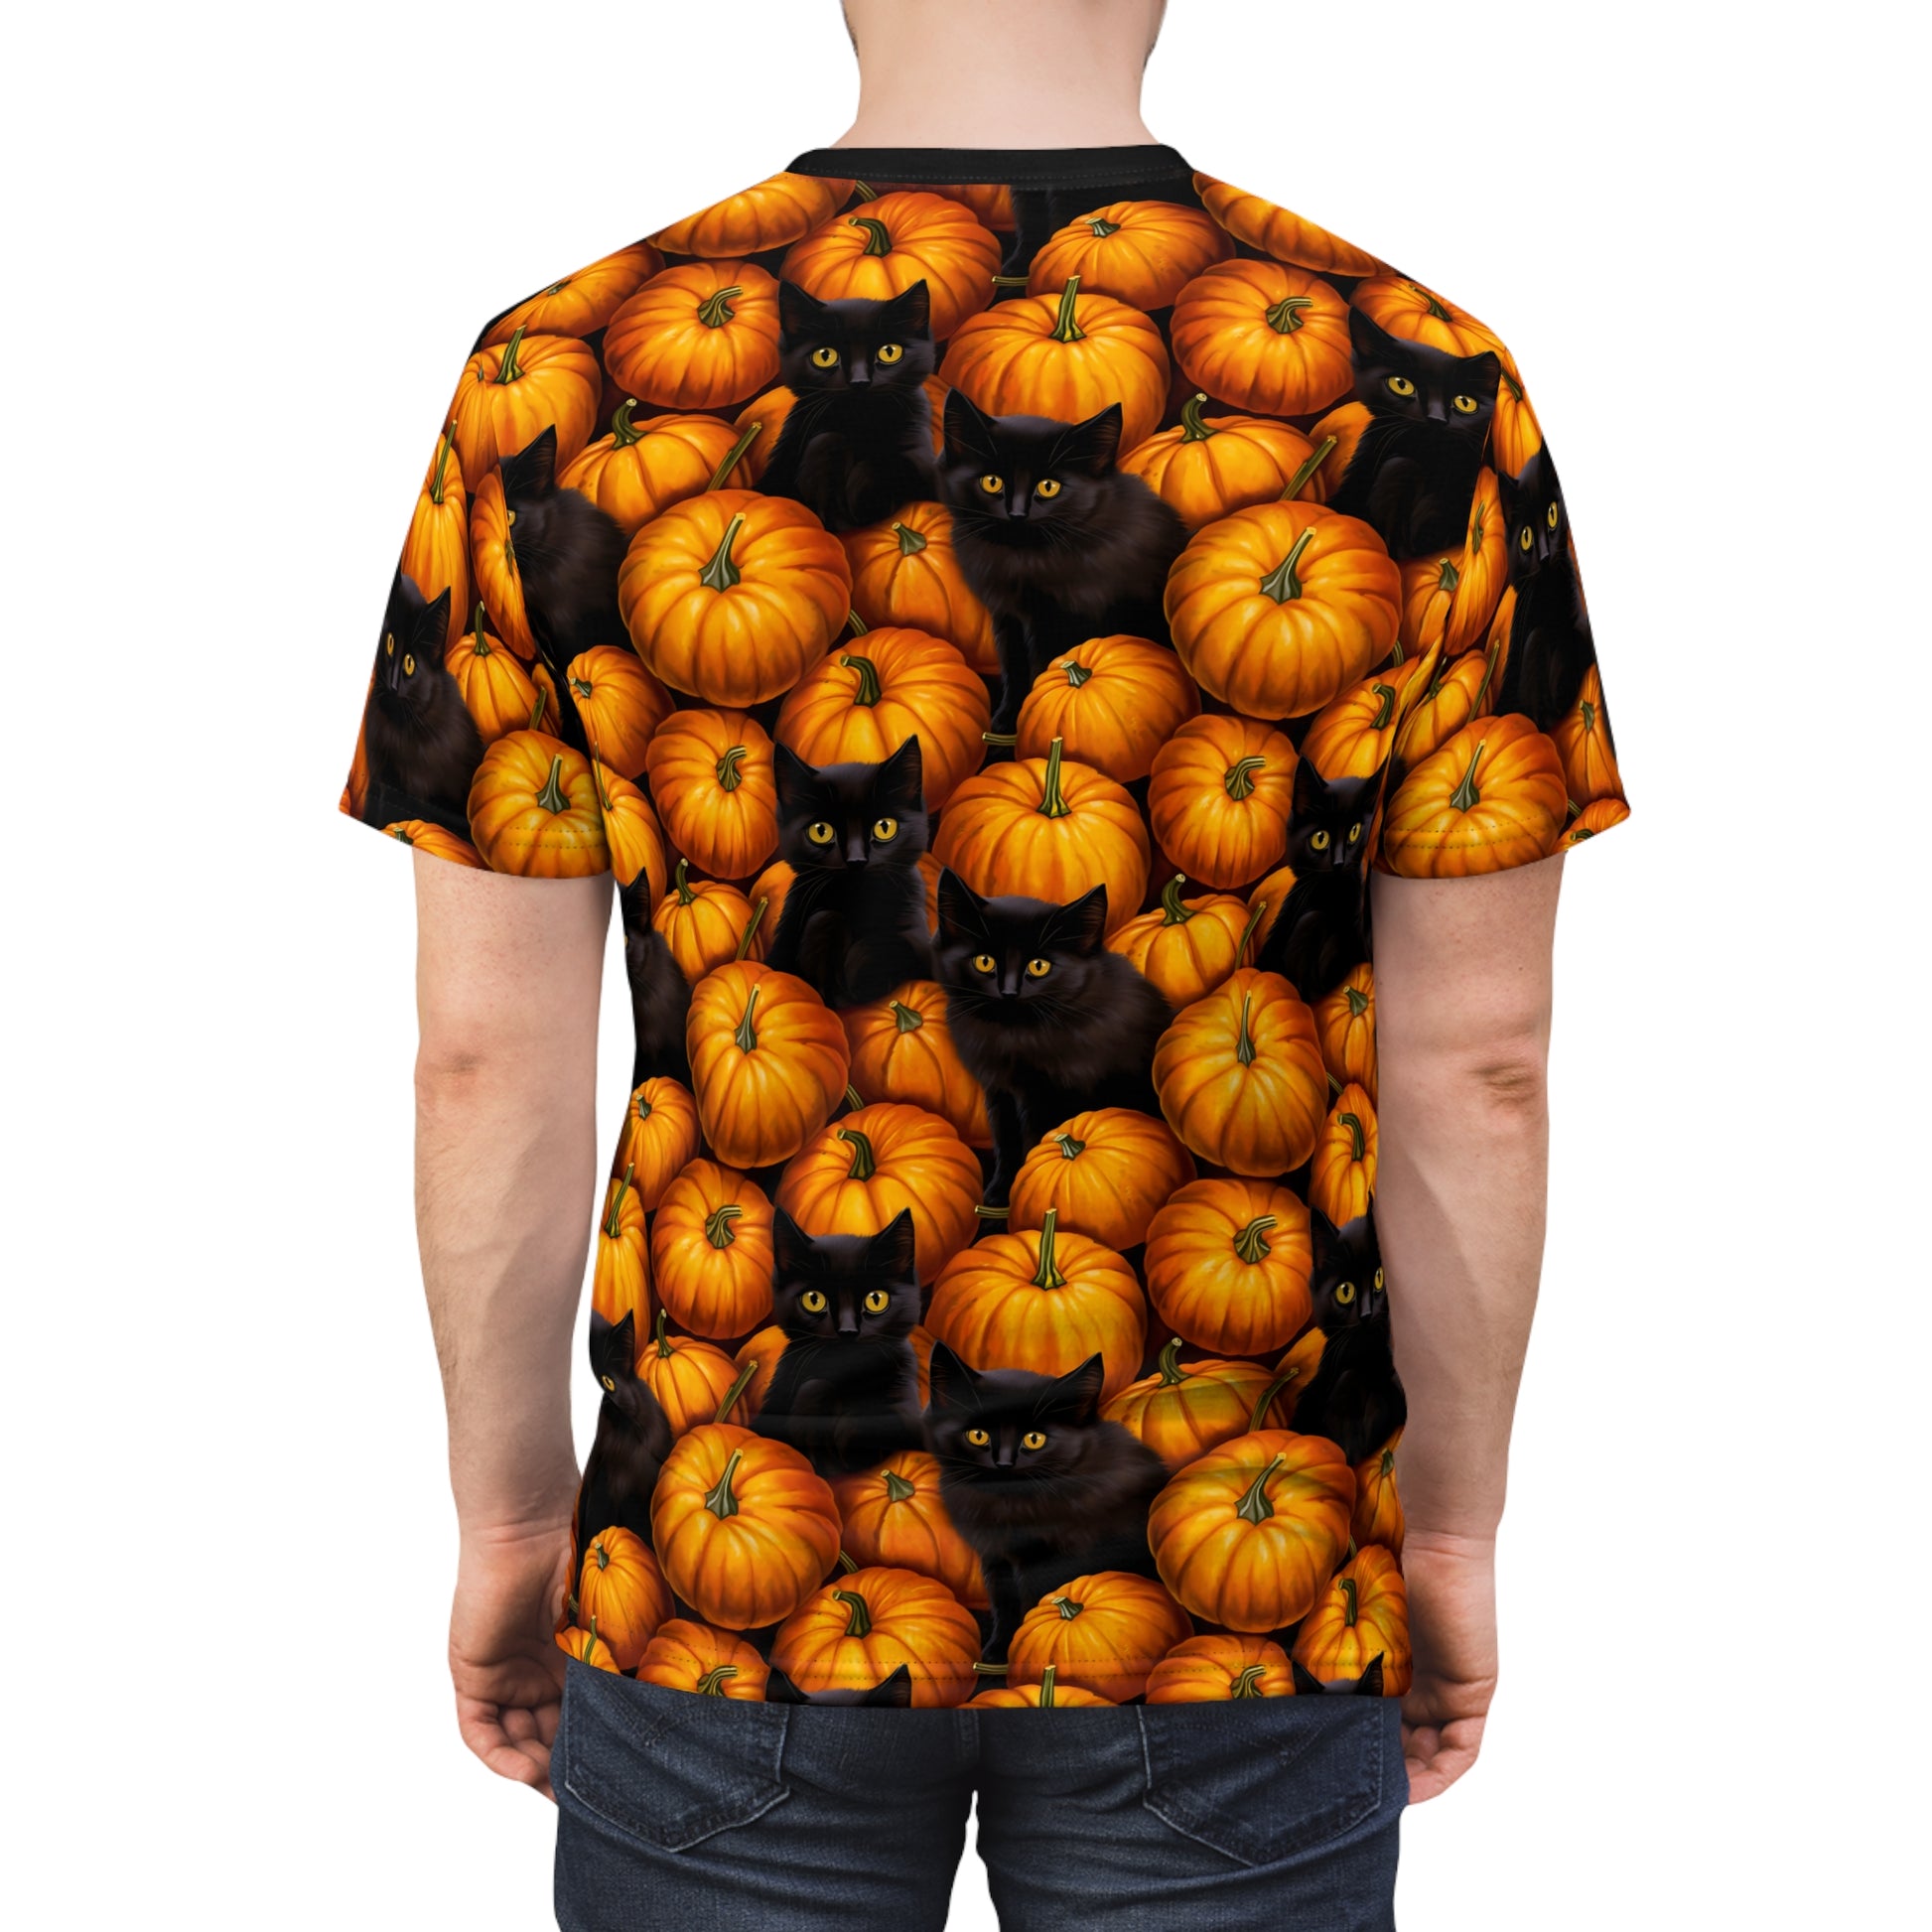 Black Kittens in the Pumpkin Patch T-Shirt by Studio Ten Design